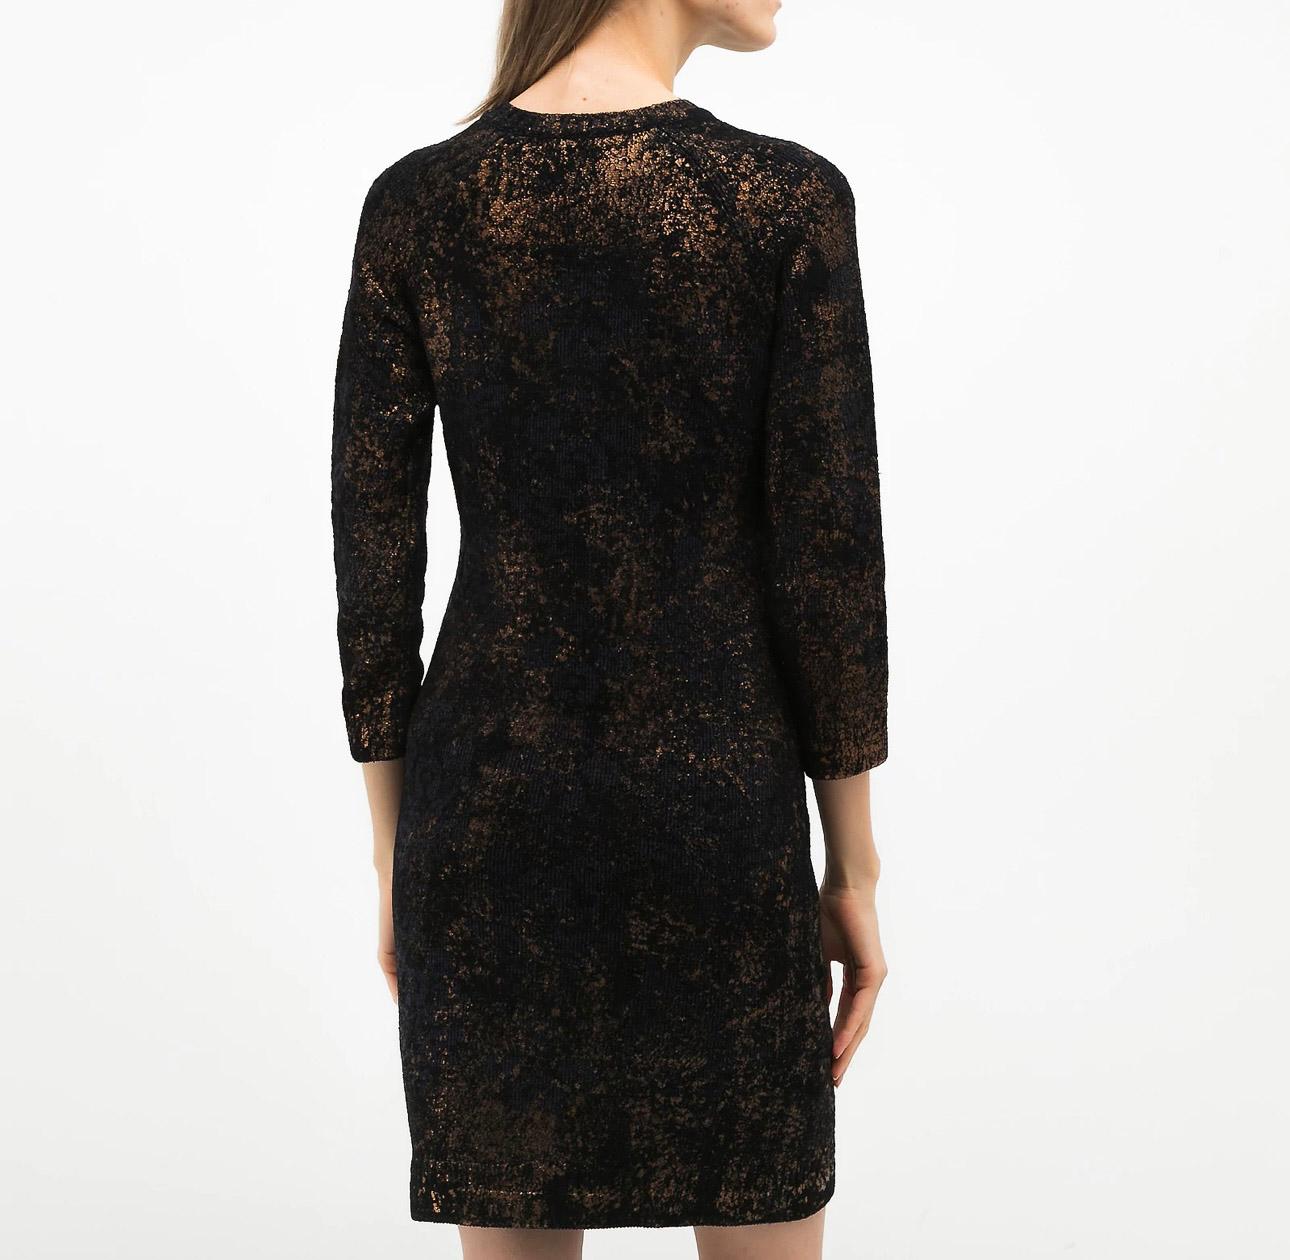 Chanel Paris / Byzance Shimmering Cashmere Dress For Sale 3